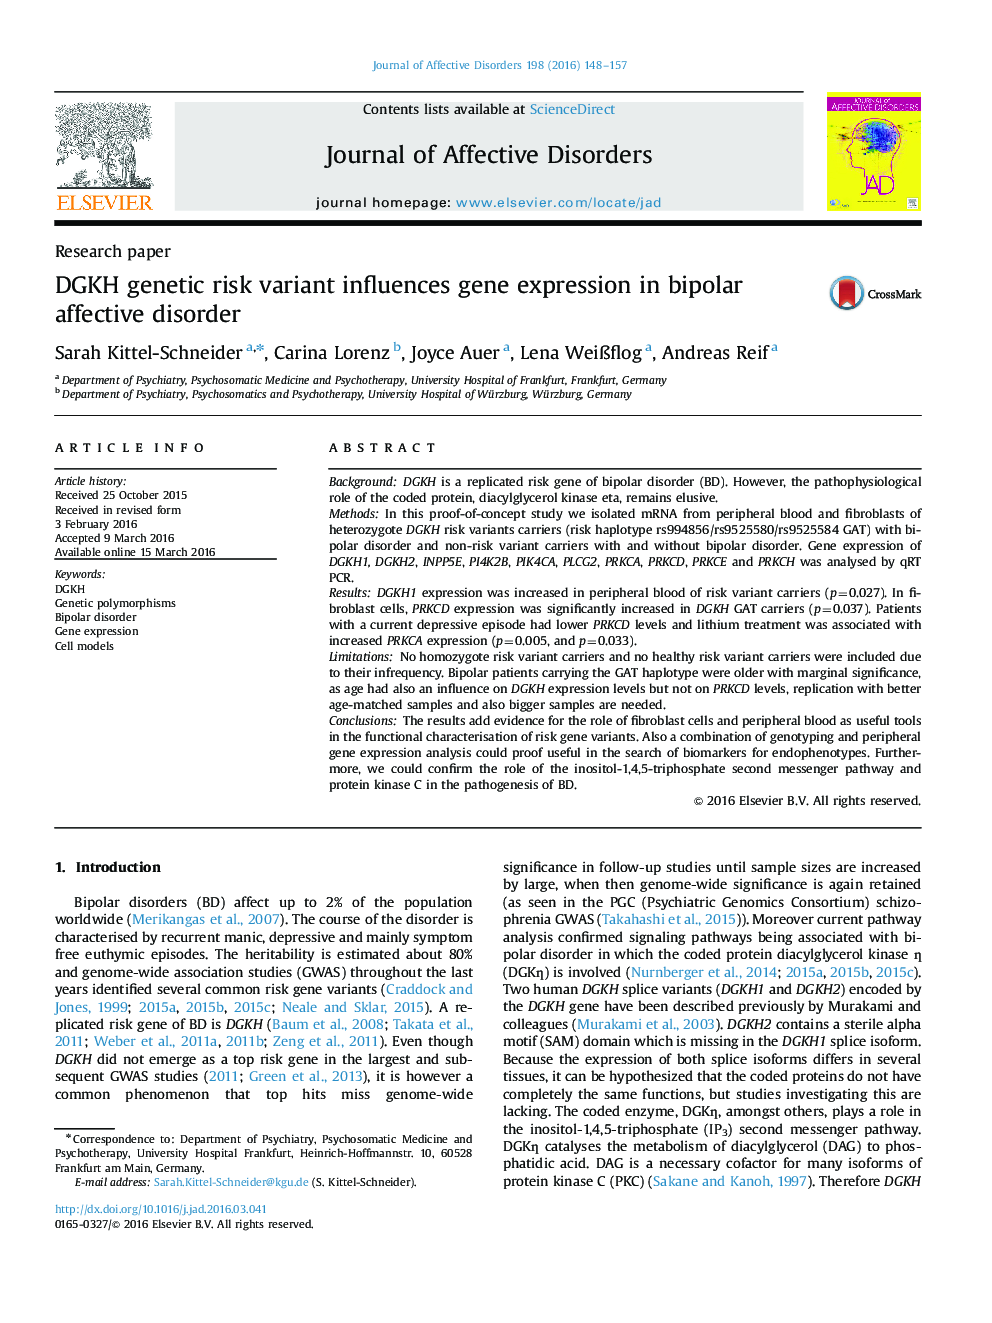 DGKH genetic risk variant influences gene expression in bipolar affective disorder